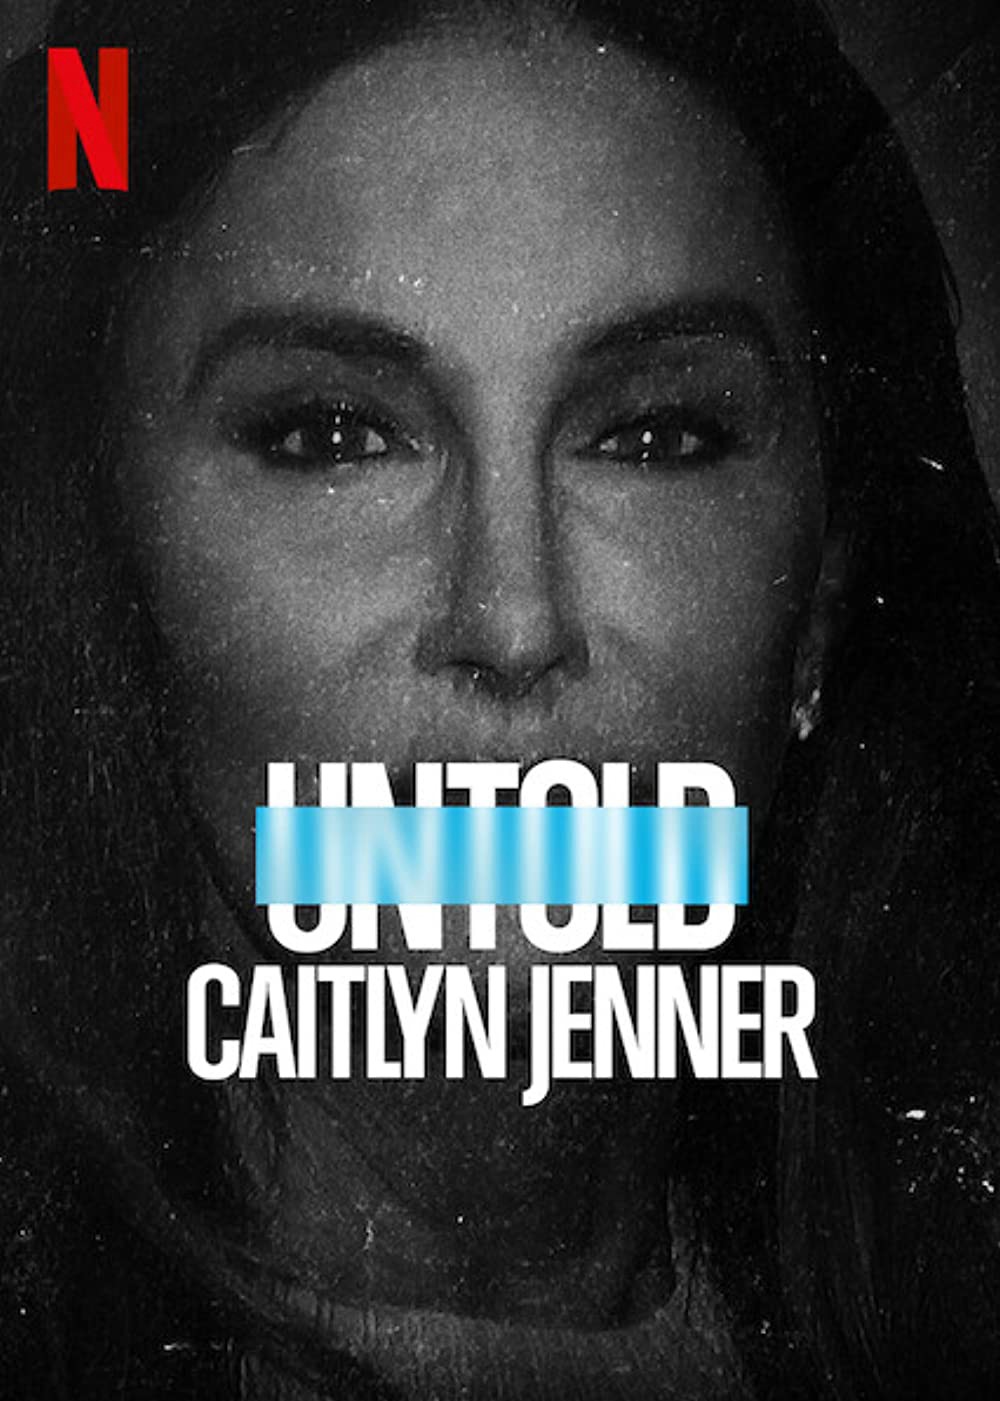 Bí mật giới thể thao: Caitlyn Jenner 2021